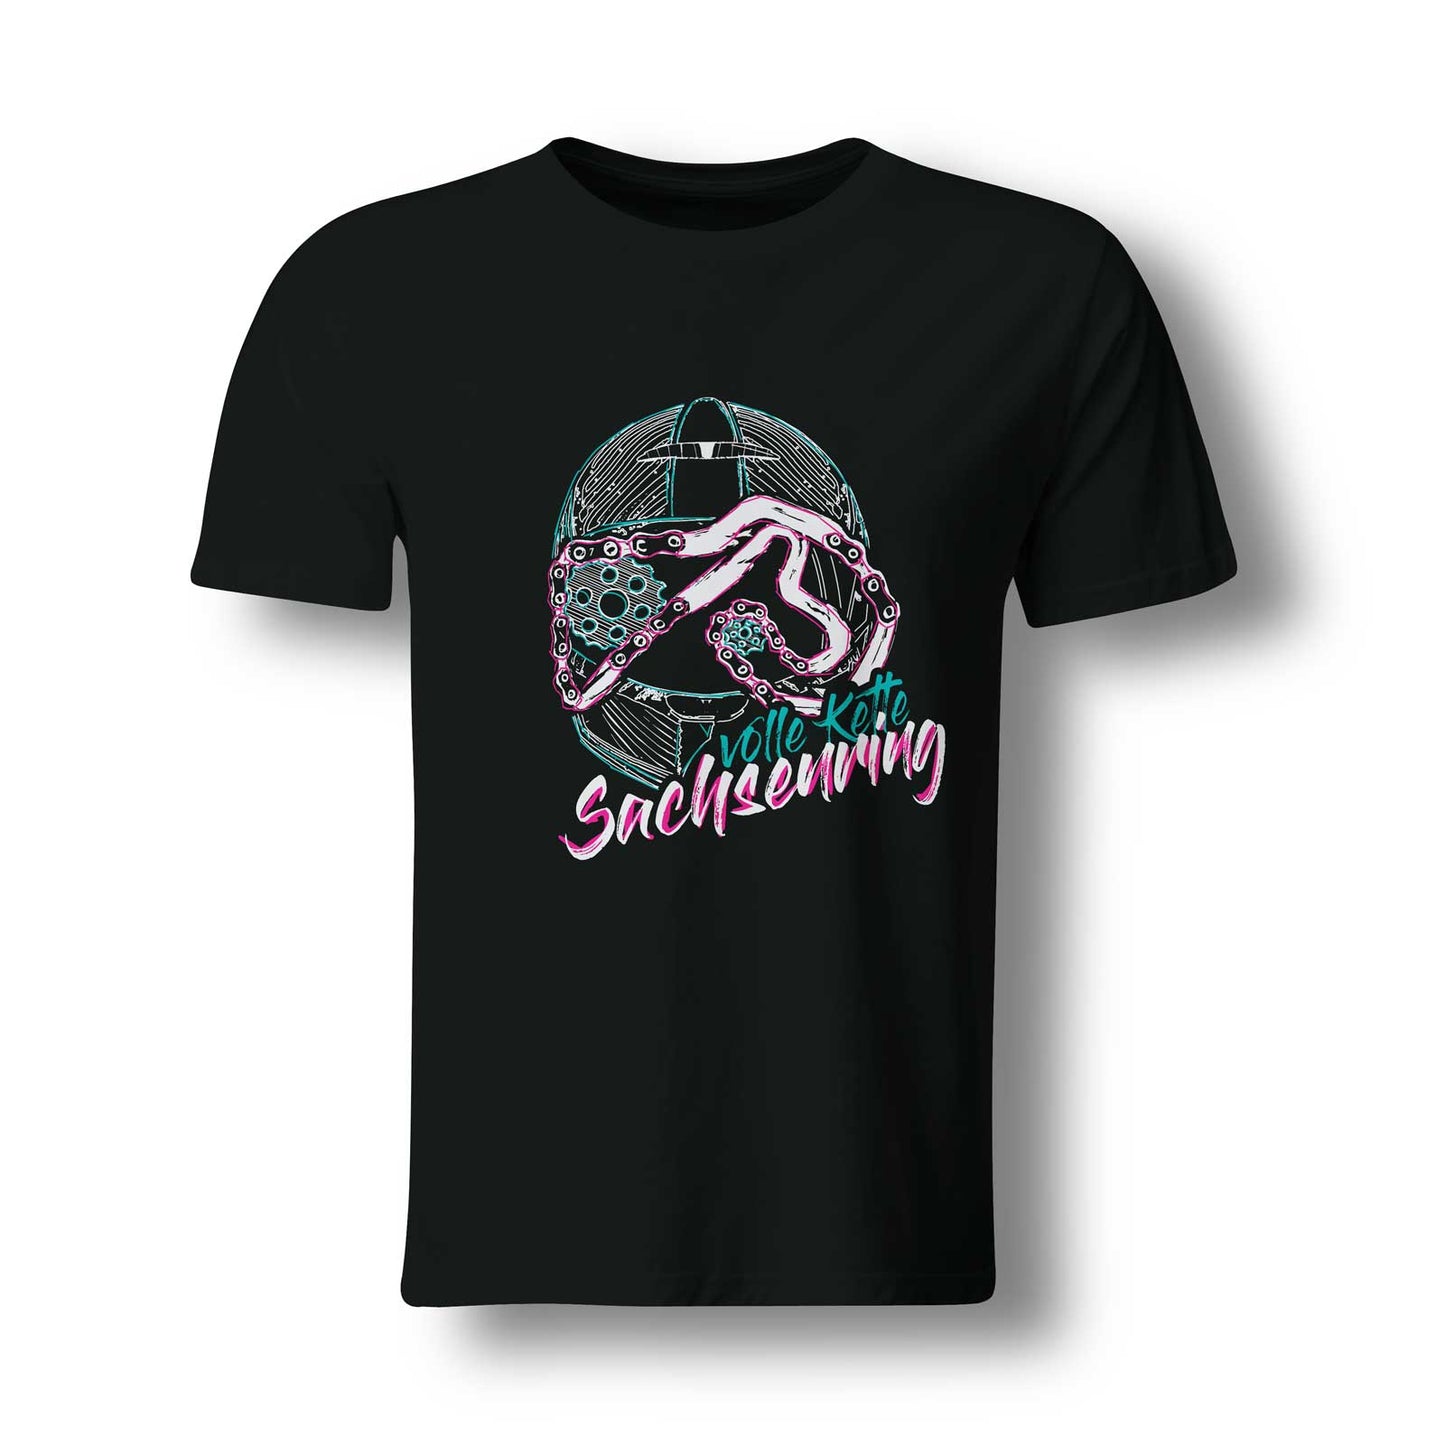 Volle Kette Sachsenring - Premium Shirt